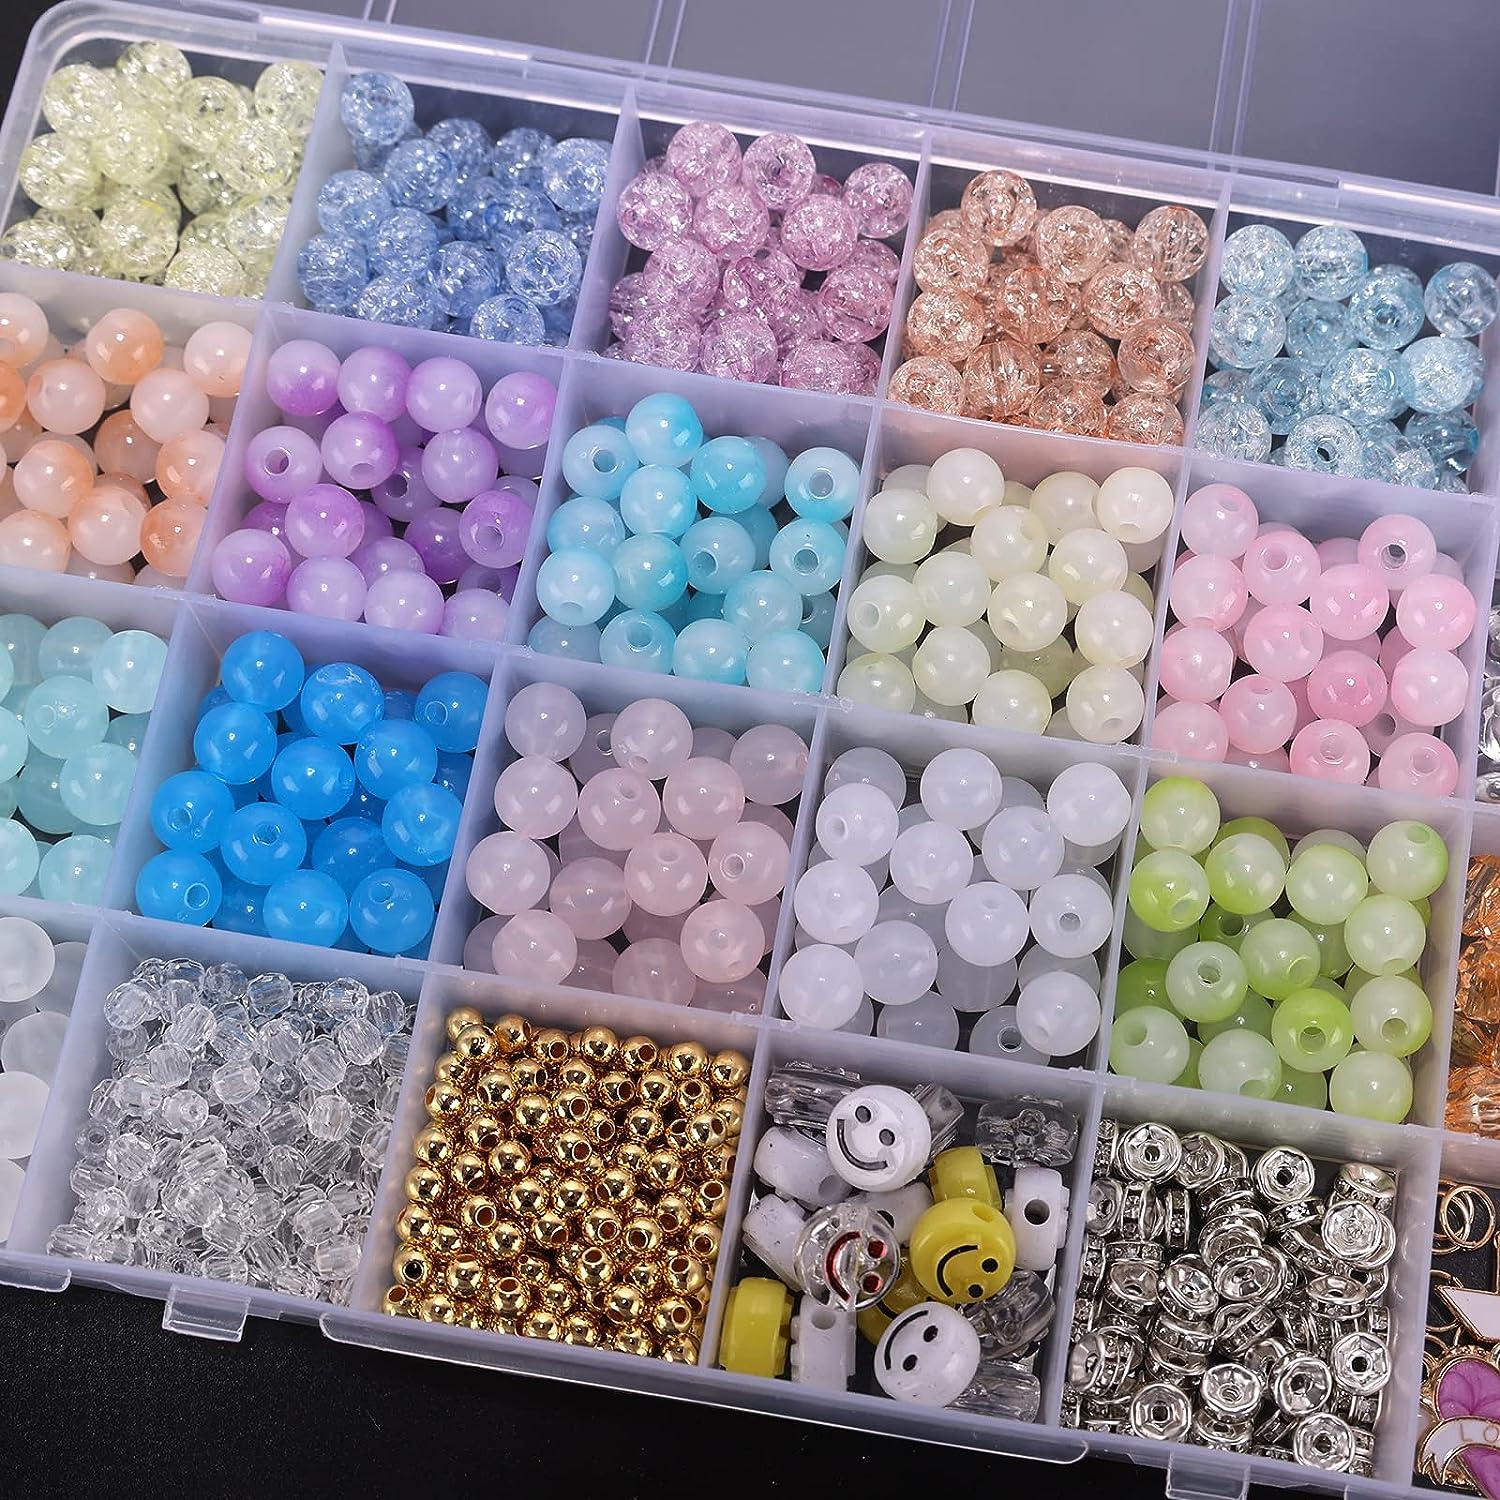 DIY Bead Kit - Mixed Beads Set for Handmade Jewelry & Craft